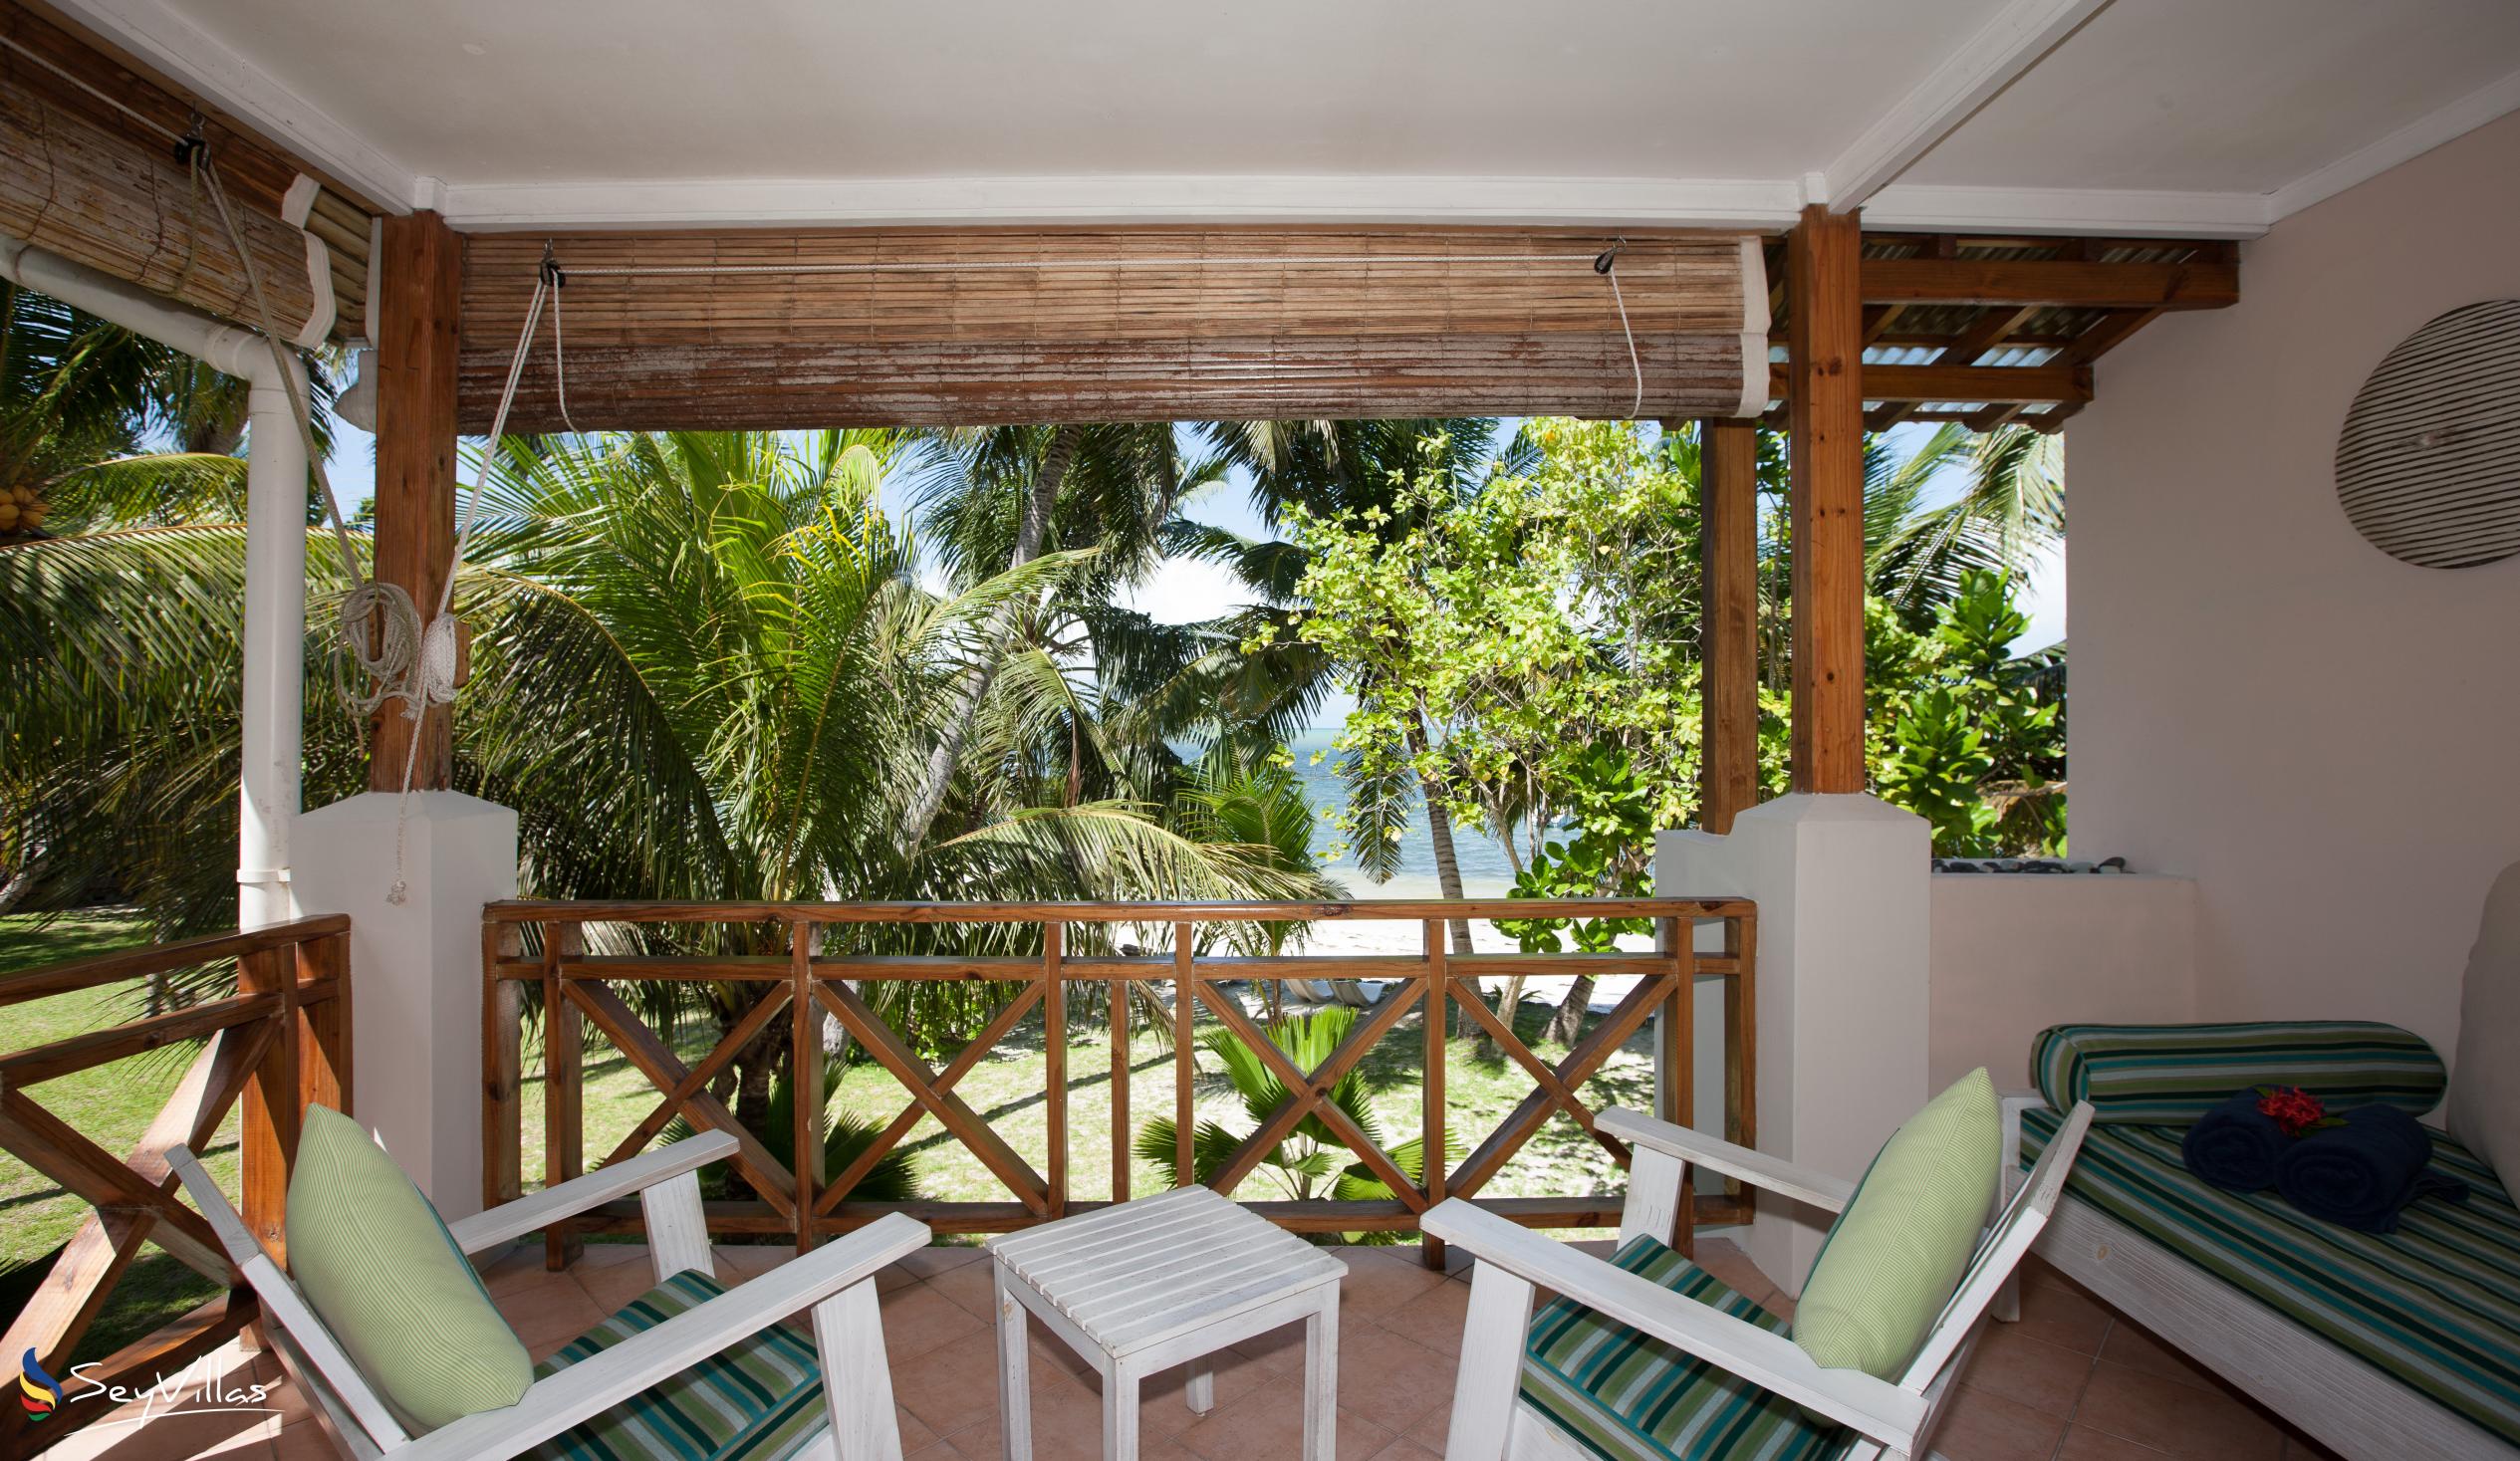 Photo 58: Indian Ocean Lodge - Double Room - Praslin (Seychelles)